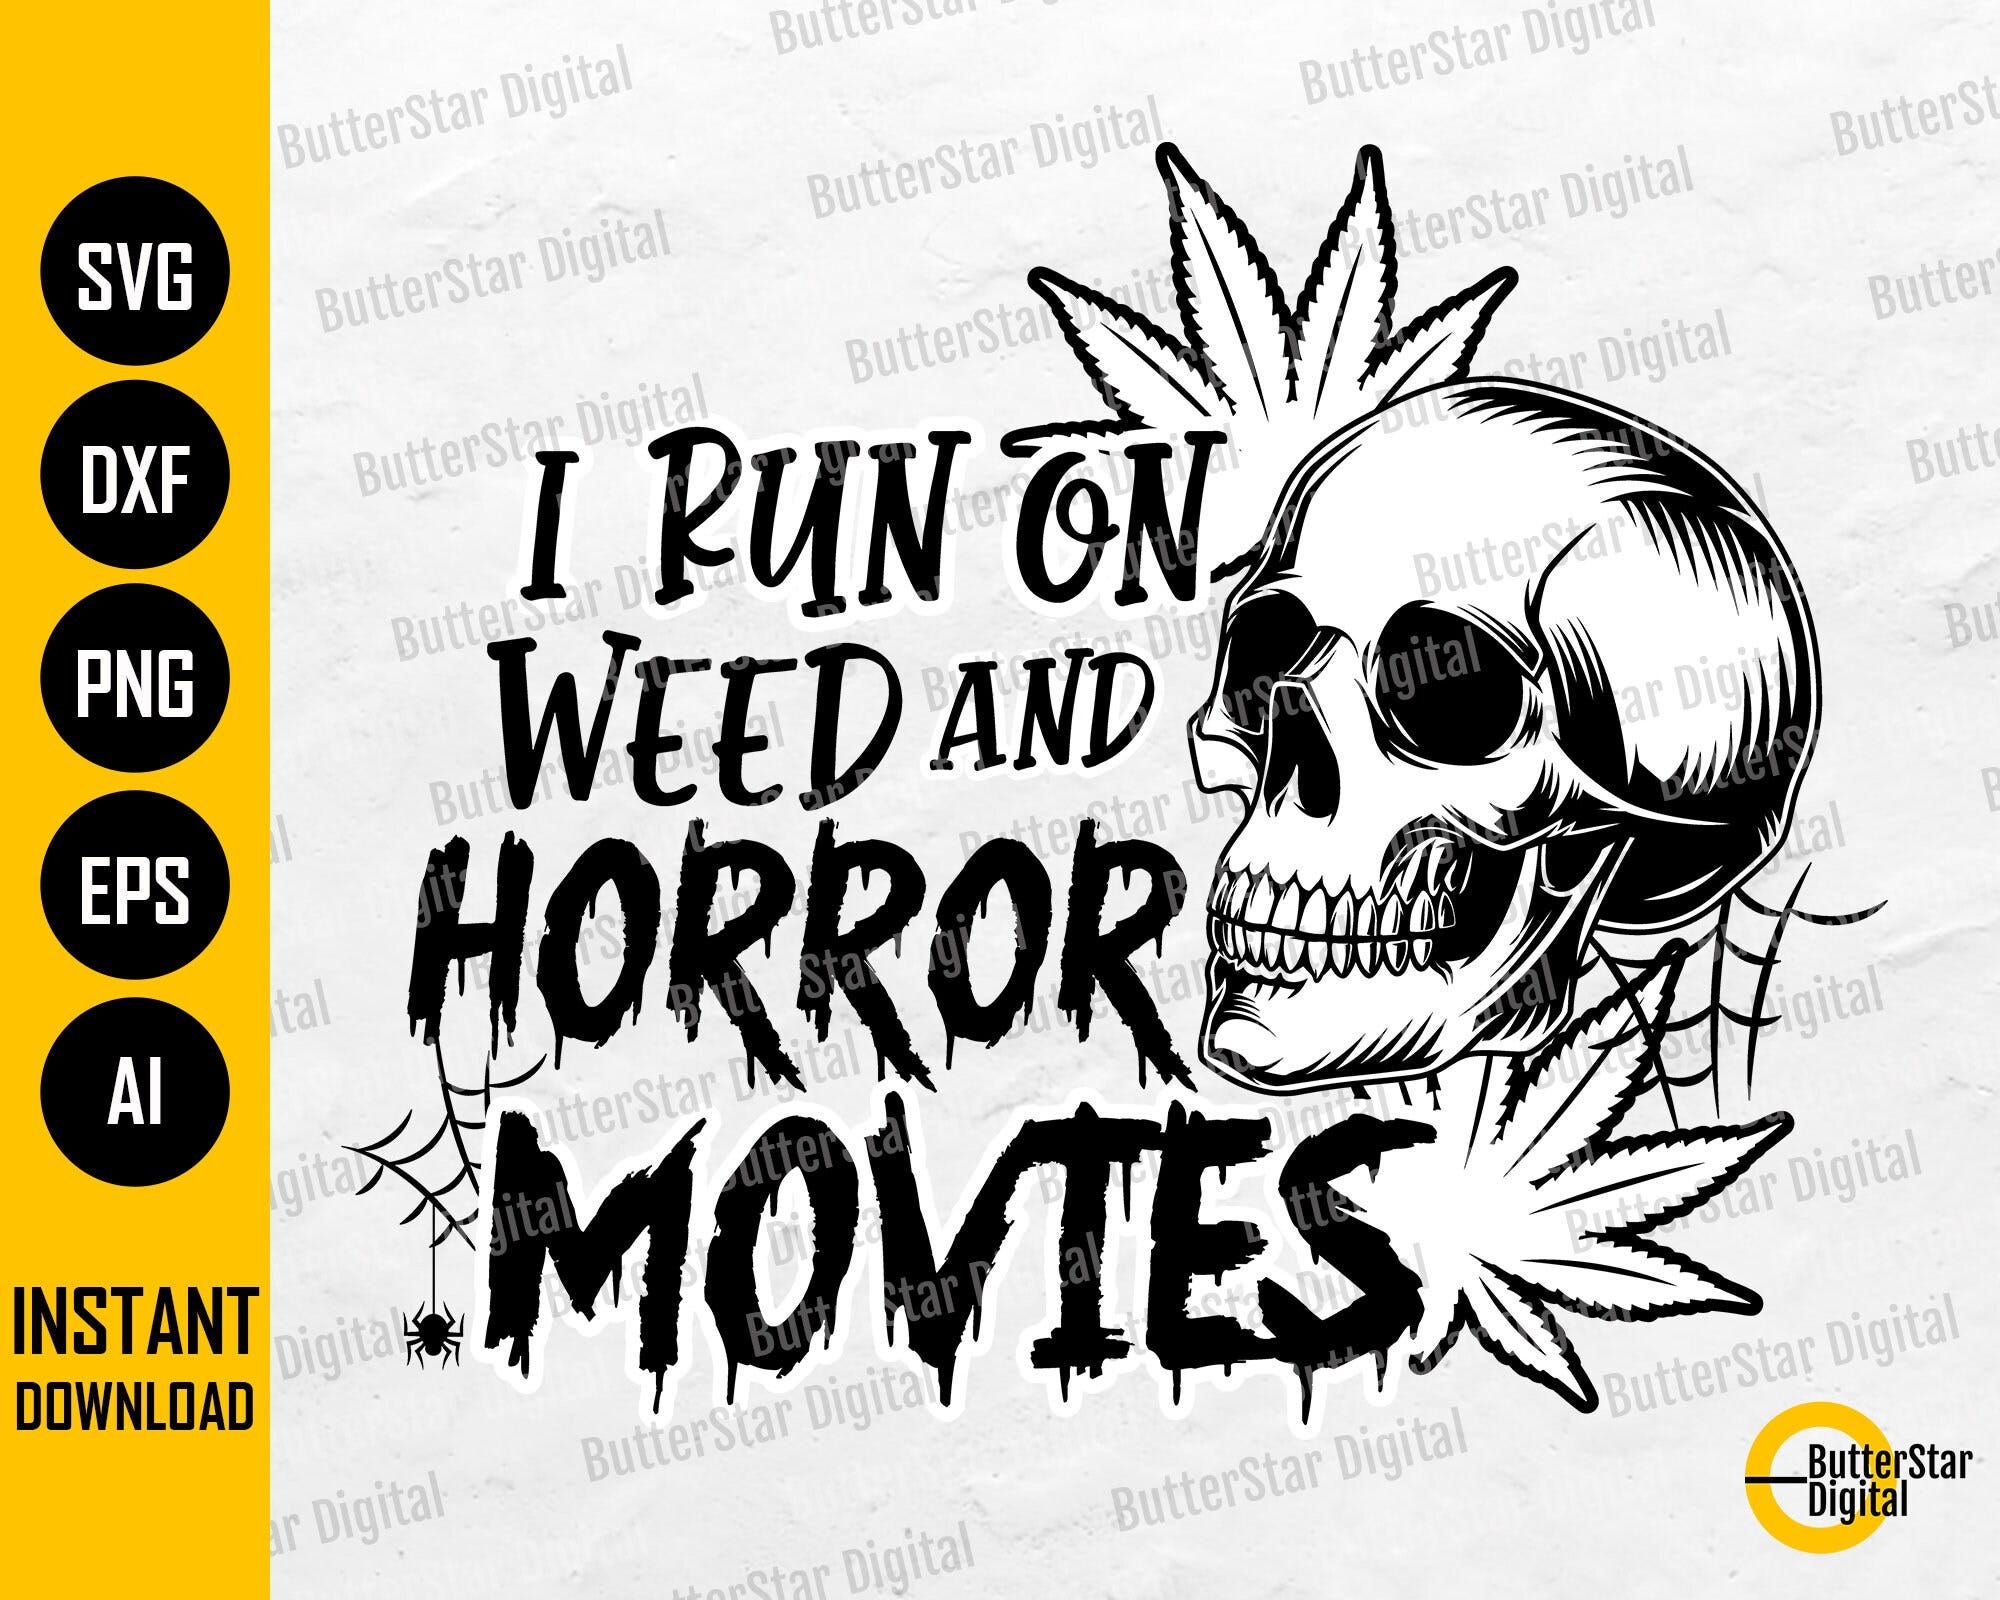 Stoner Horror SVG | Funny Halloween Shirt Tee | 420 Weed Hemp Ganja Dope High | Cutting File Cuttable Clip Art Vector Digital Dxf Png Eps Ai